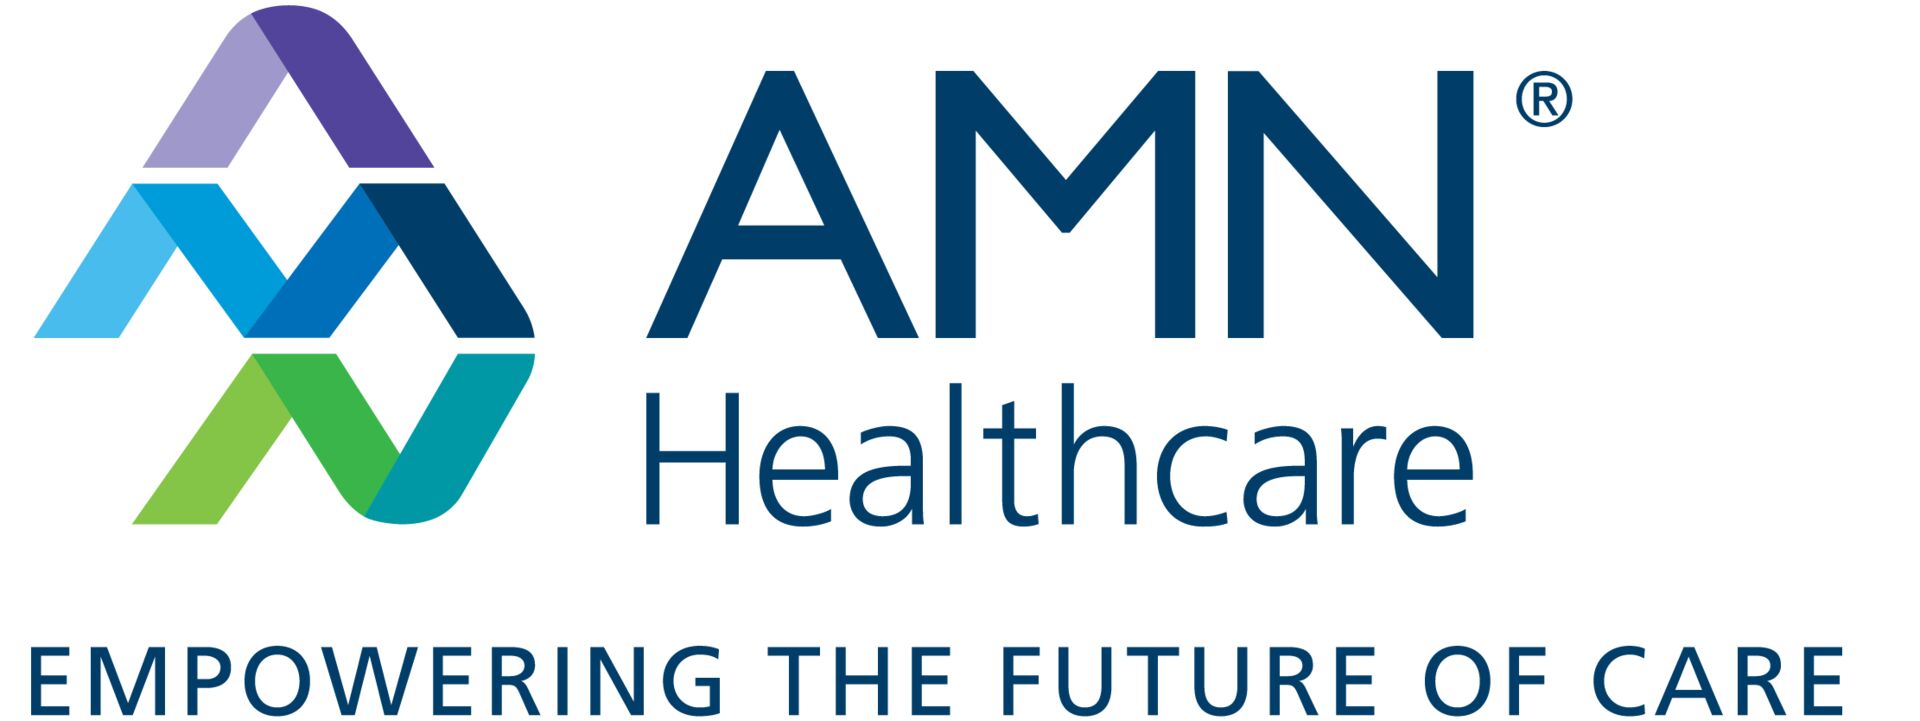 Large-AMN-Logo-wTagline.jpg